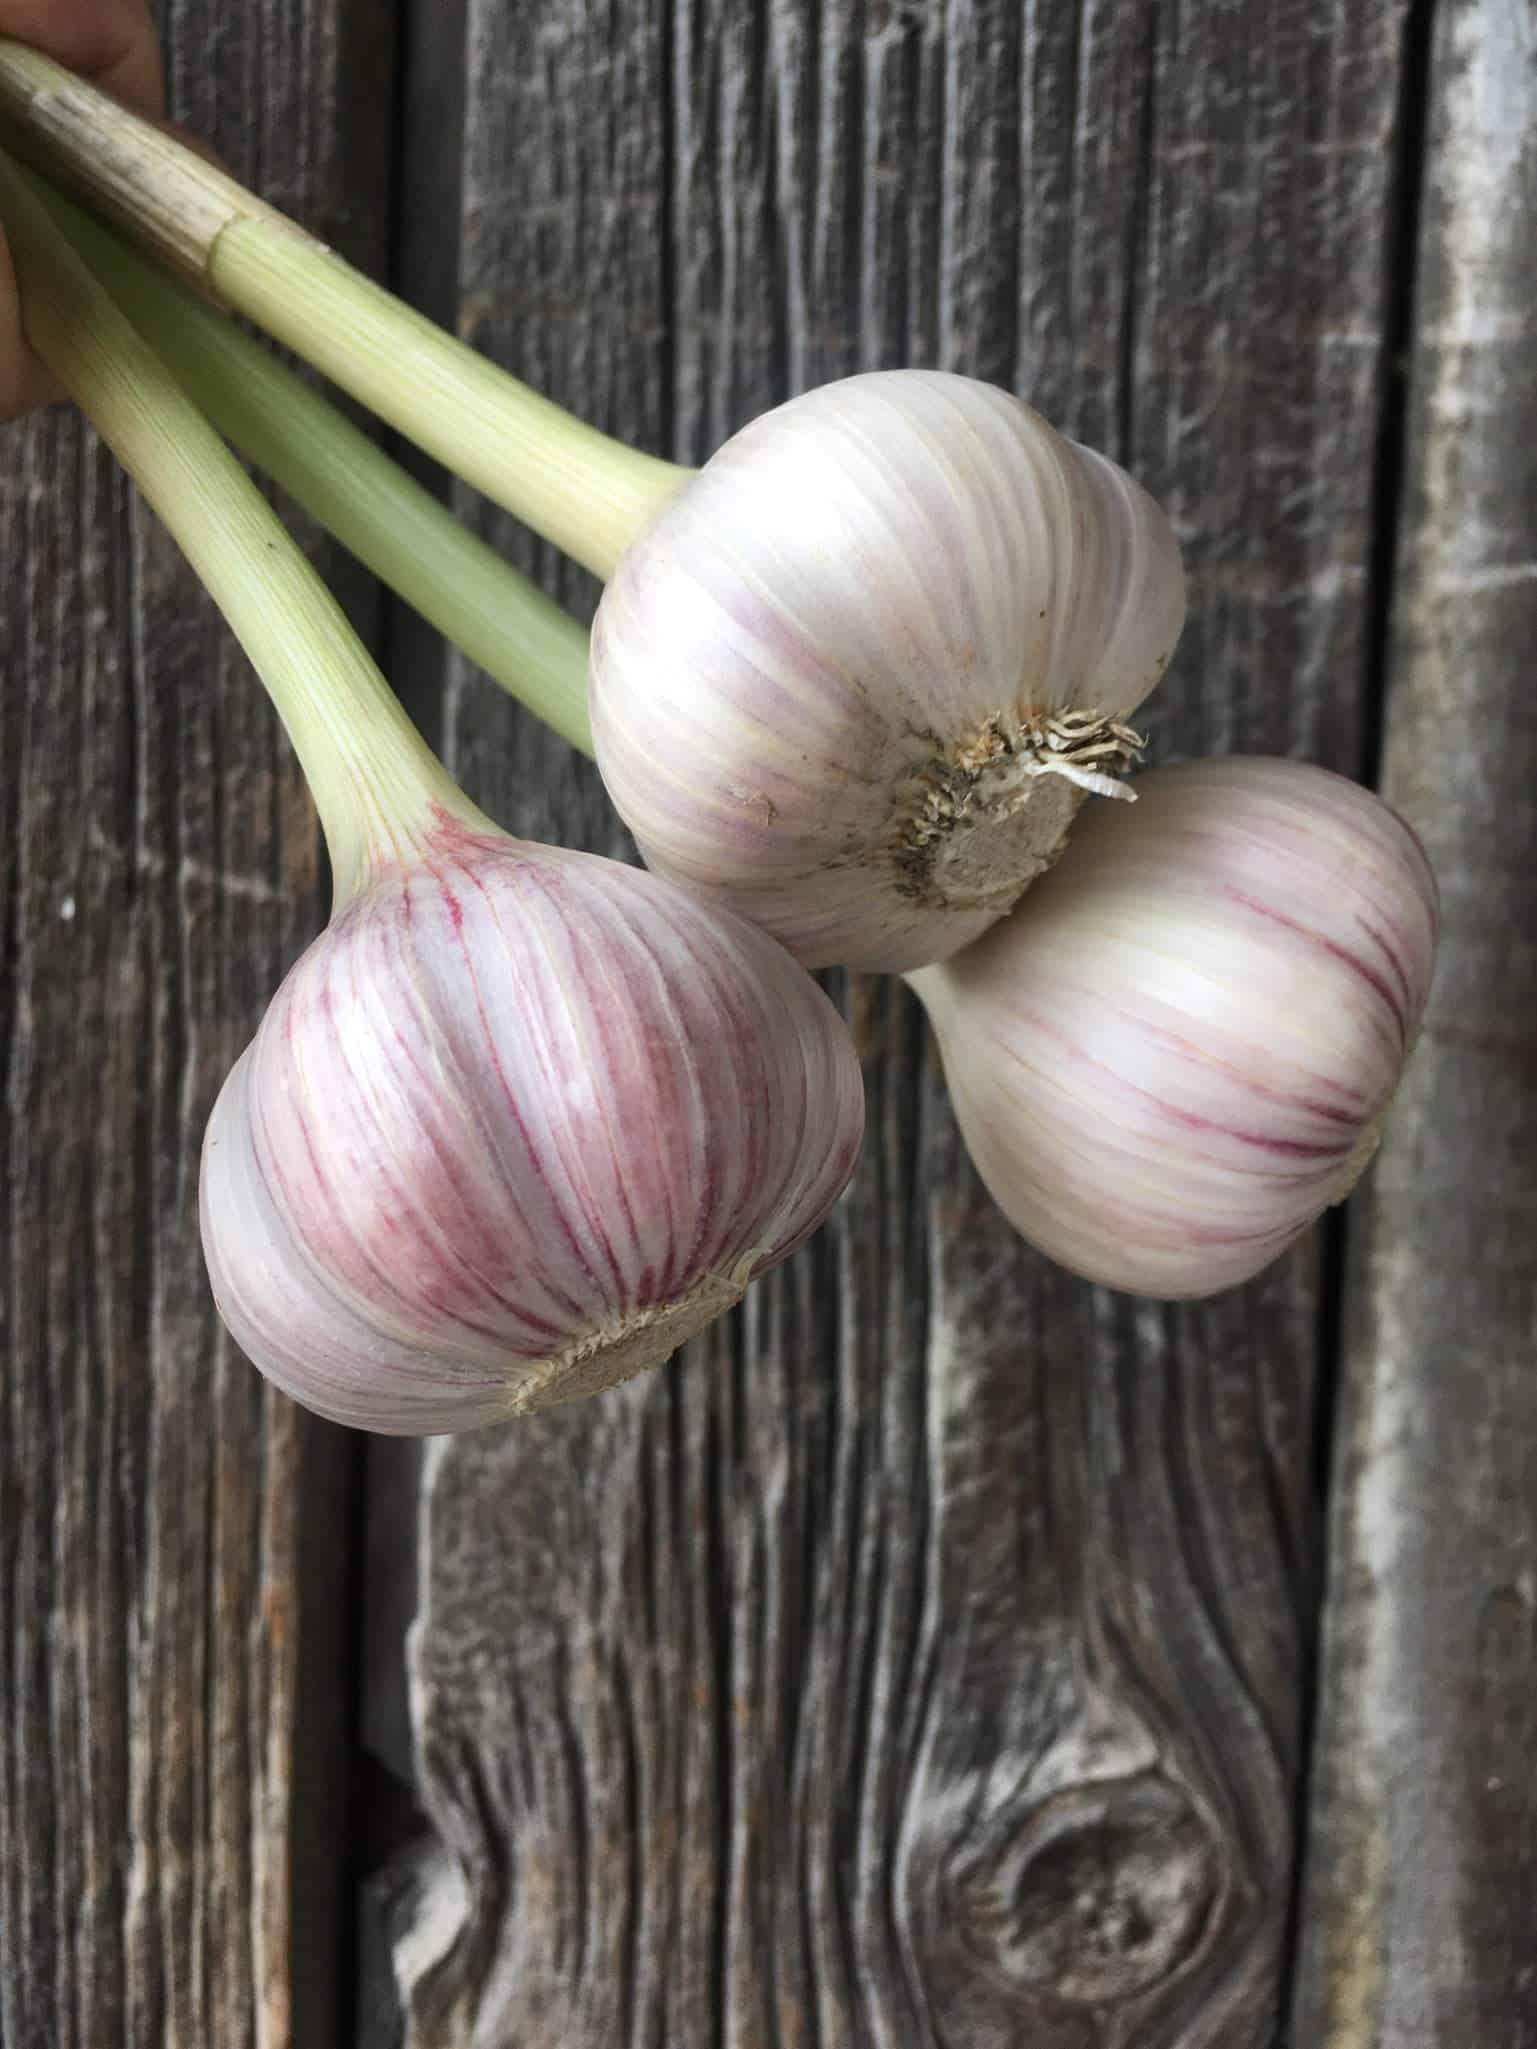 Three bulbs of fresh garlic